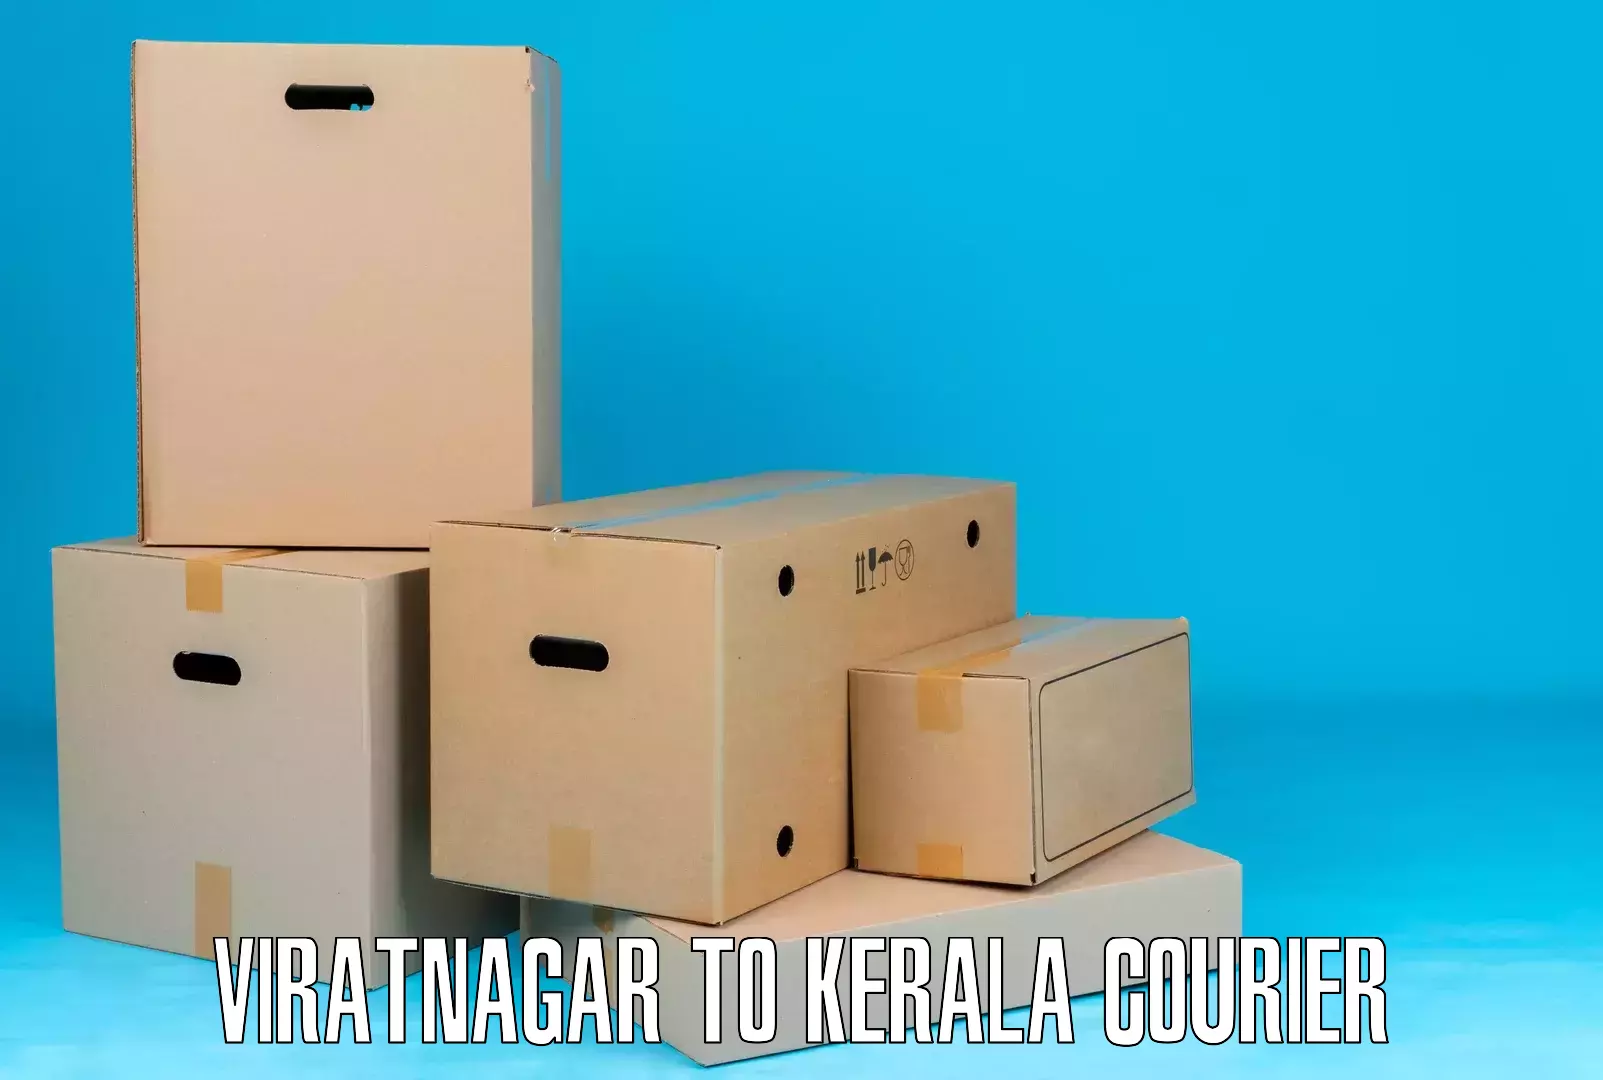 Courier service innovation Viratnagar to Kozhikode